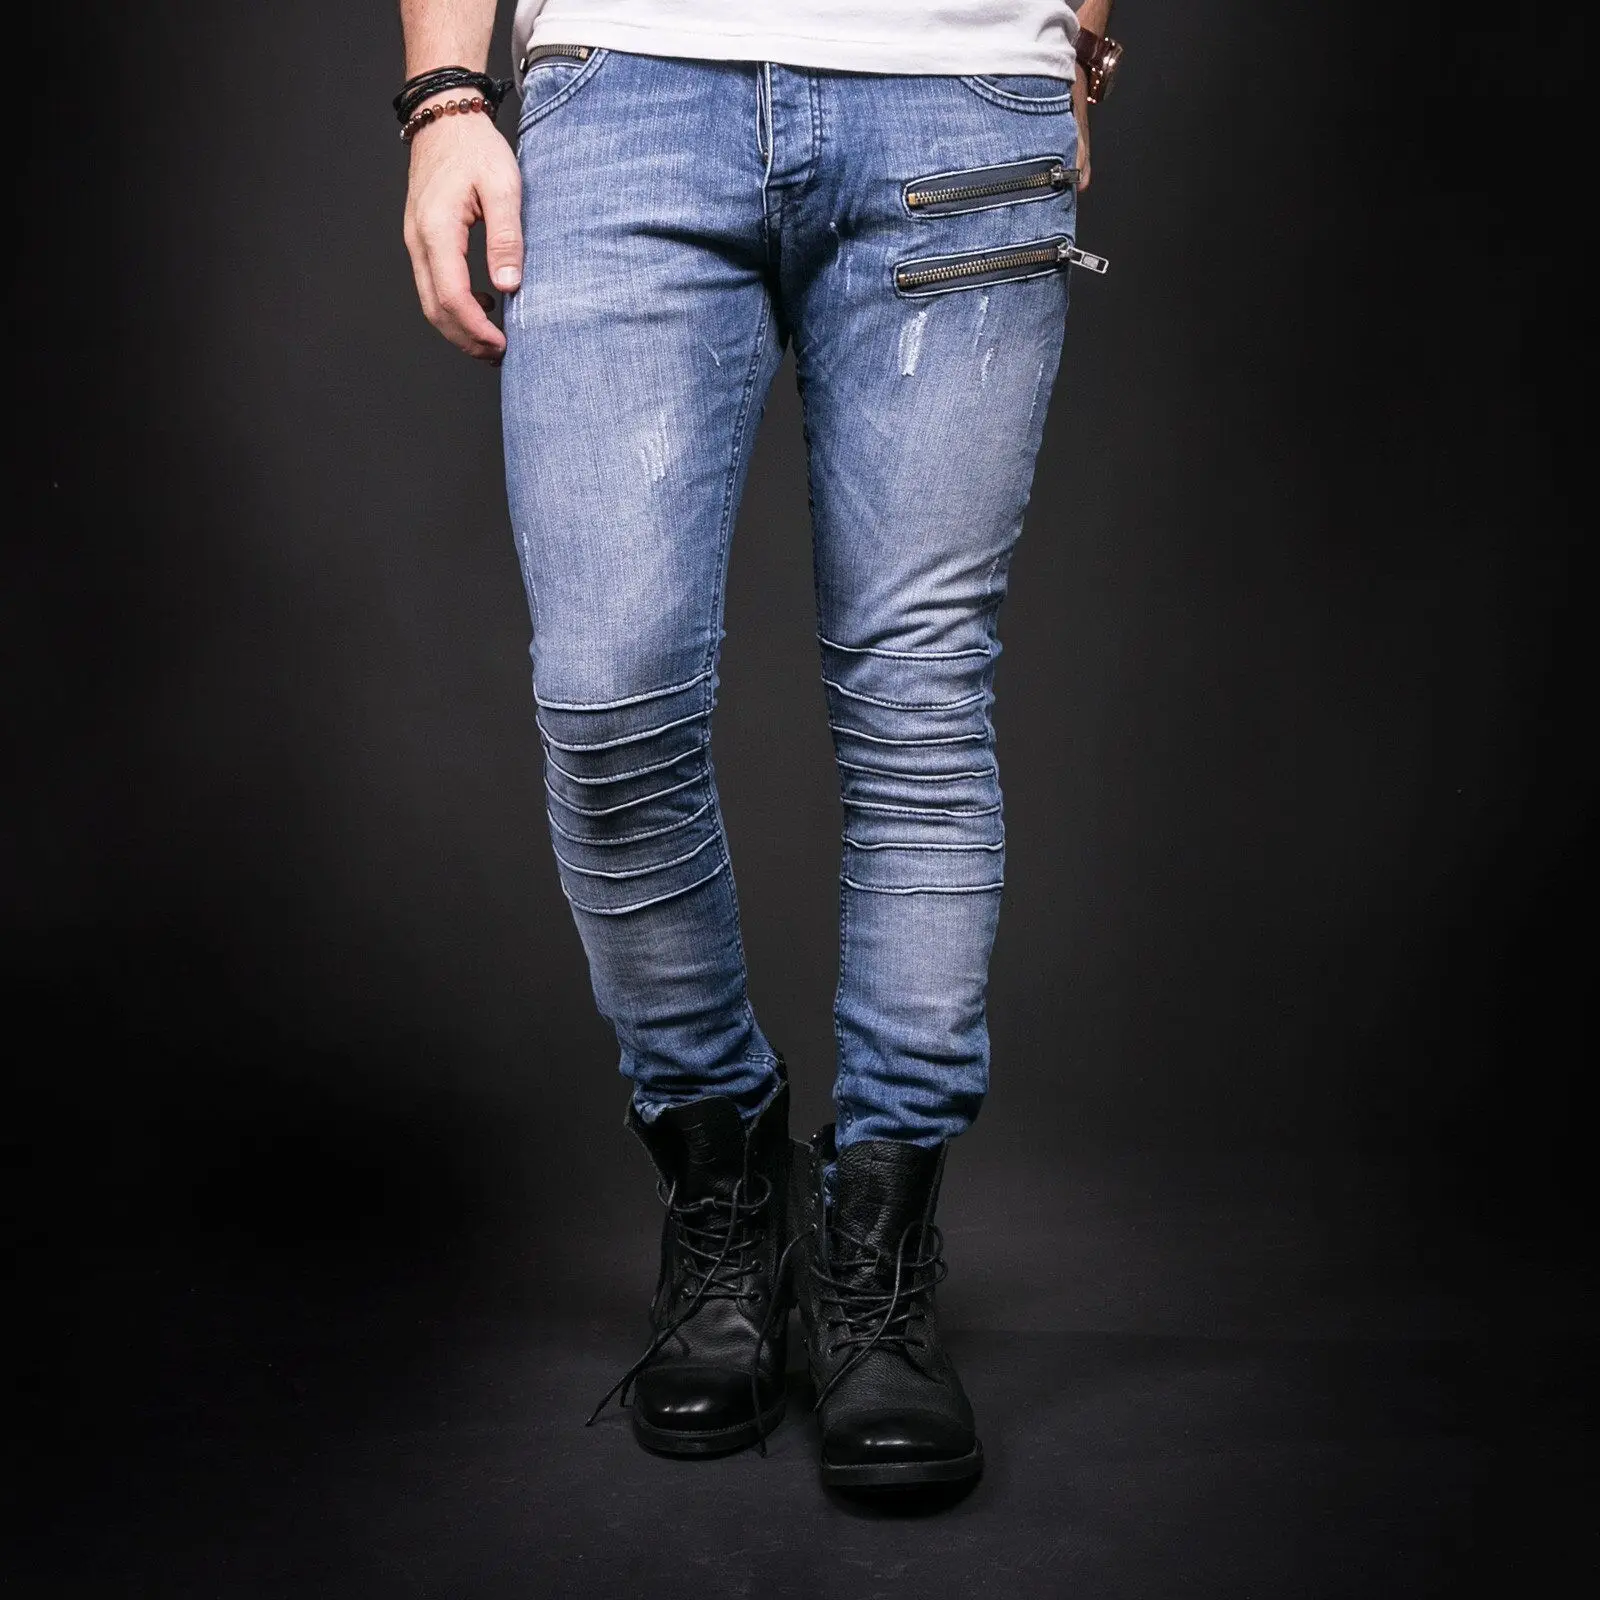 

2019 Men Stylish Pleated Jeans Pants Biker Skinny Strech Straight Frayed Denim Trousers New Fashion Elastic Side Zipper Jeans